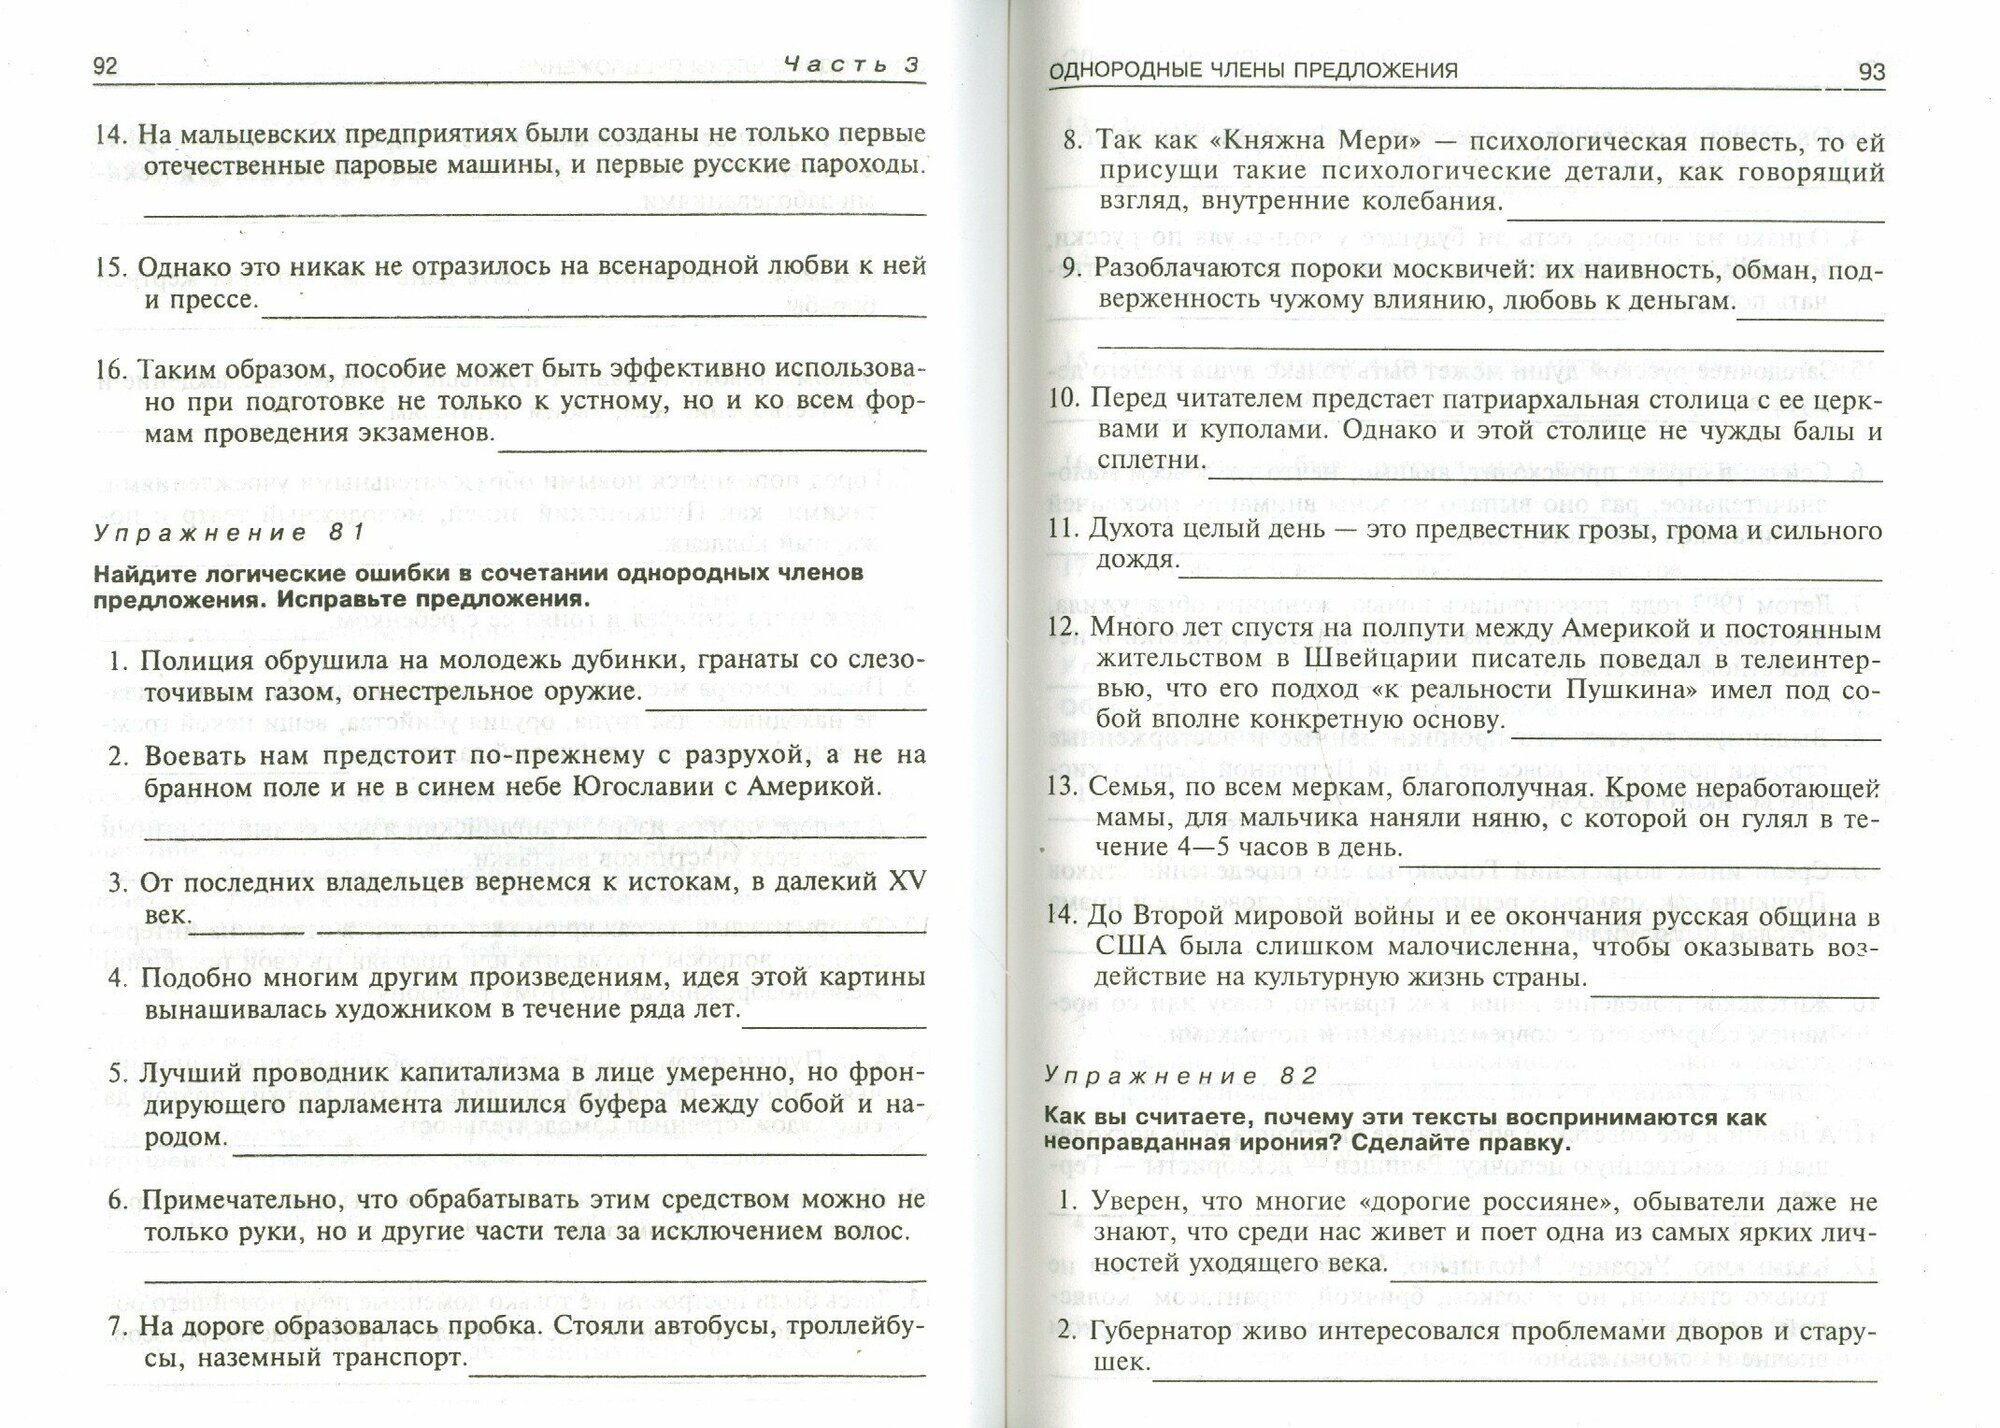 Стилистика русского языка. Практикум - фото №2